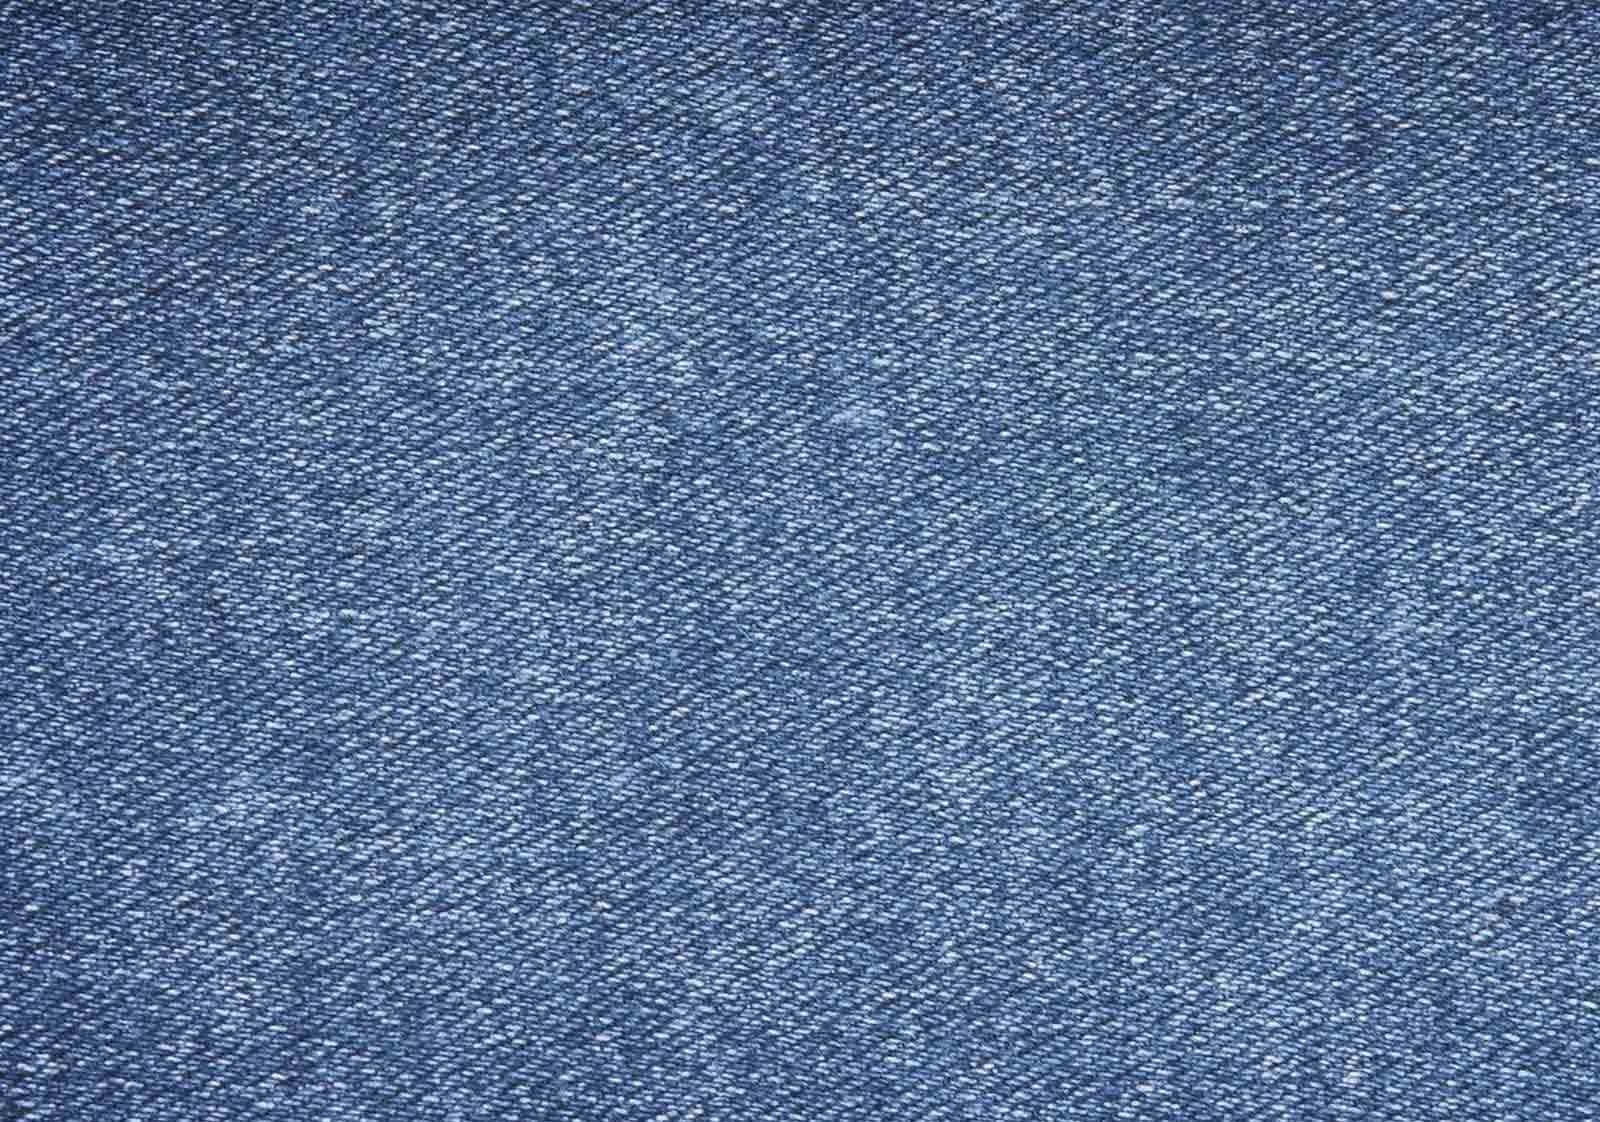 Unelegante Par De Jeans De Mezclilla Real, De Color Azul Profundo. Fondo de pantalla